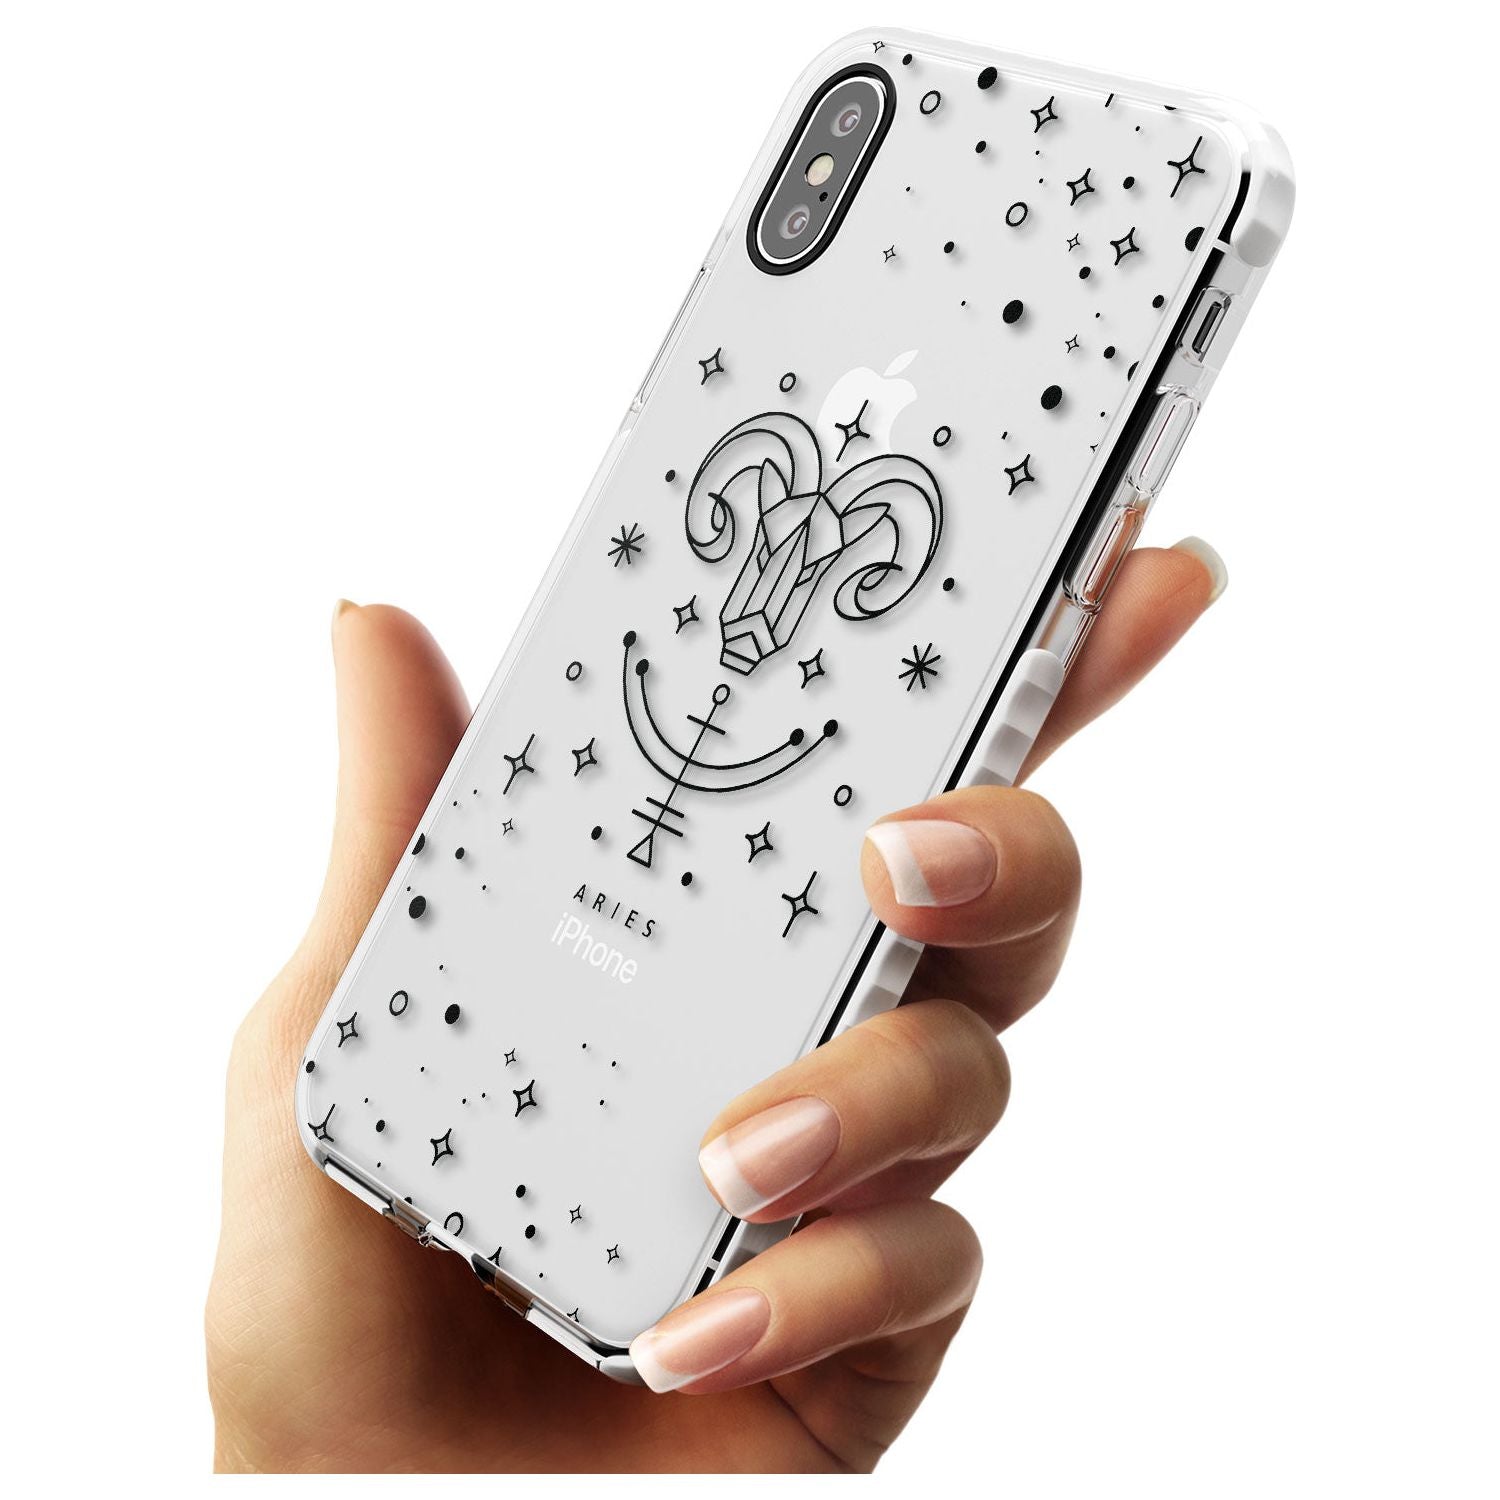 Aries Emblem - Transparent Design Impact Phone Case for iPhone X XS Max XR